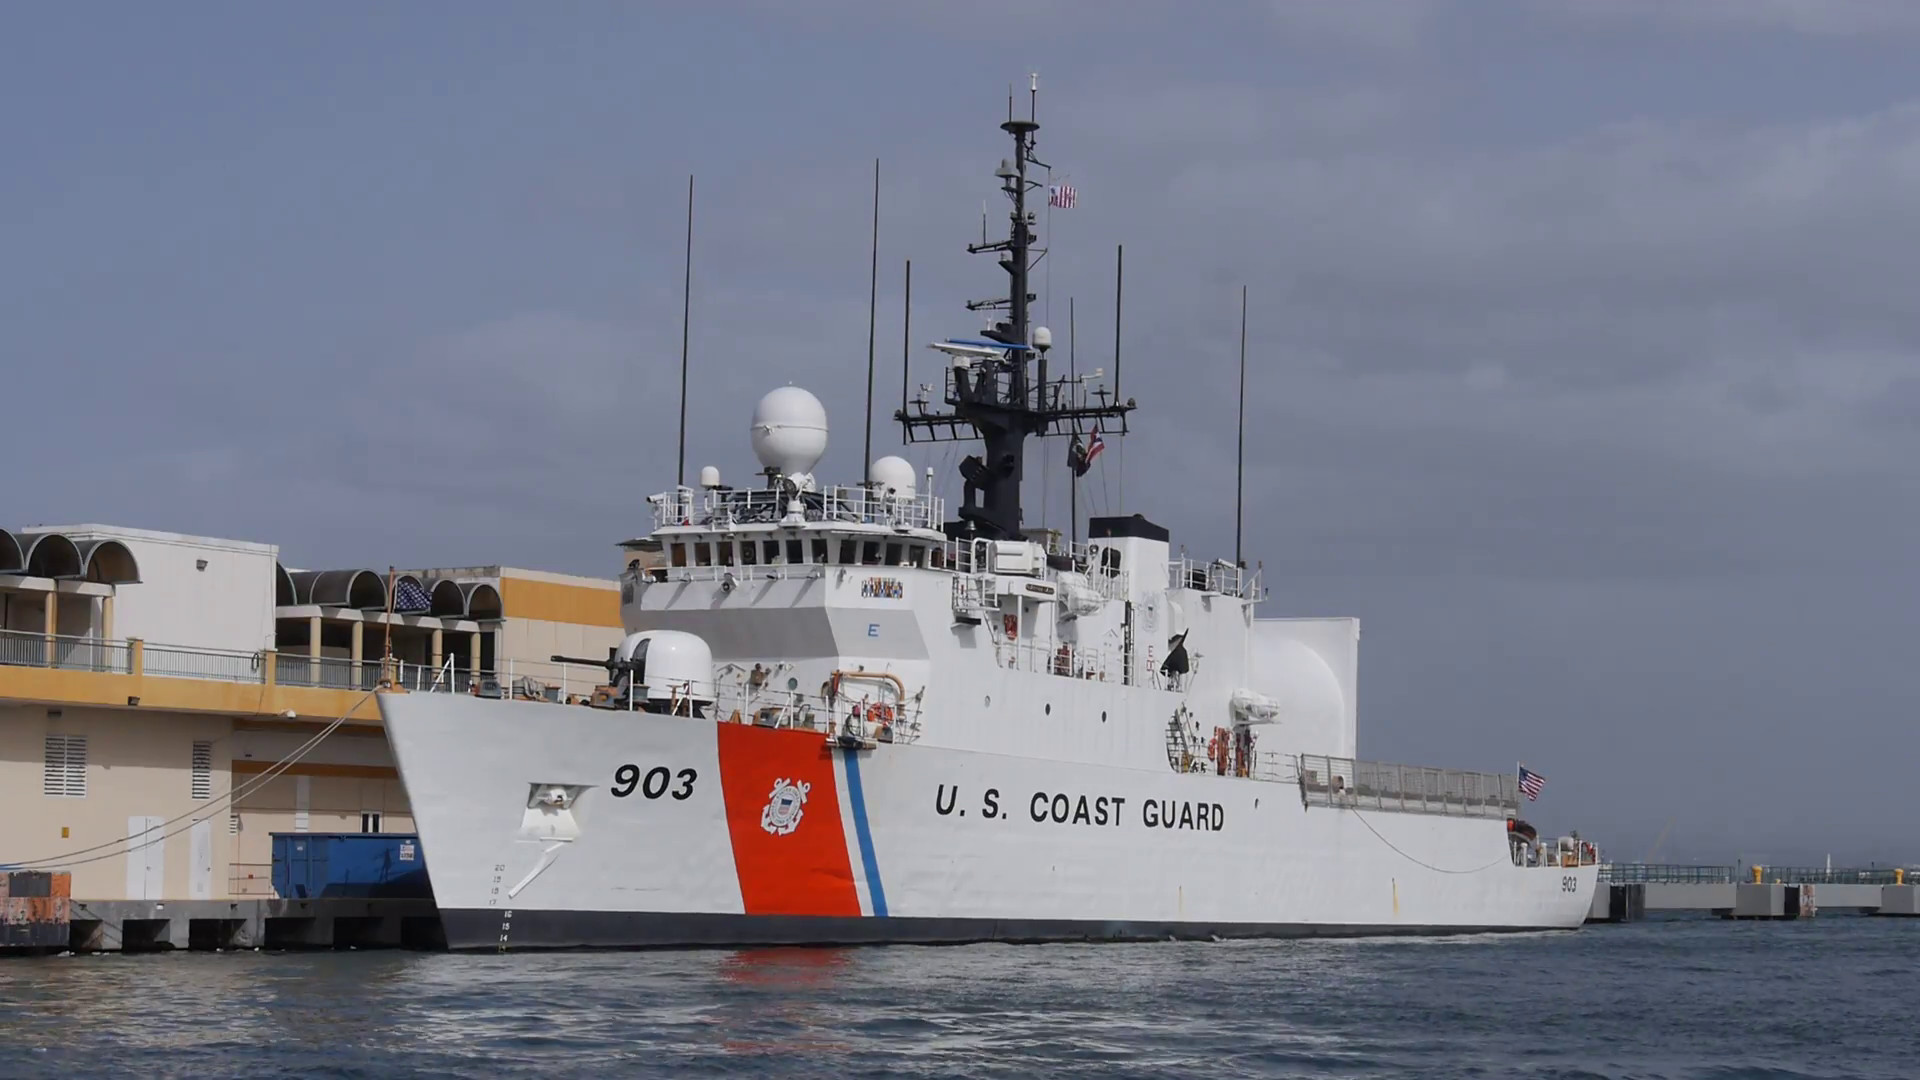 1920x1080 San Juan, Puerto Rico - July 2014: USCGC Harriet Lane (WMEC 903) - U.S.  Coast Guard a multi-mission 270-foot medium-endurance cutter ship.